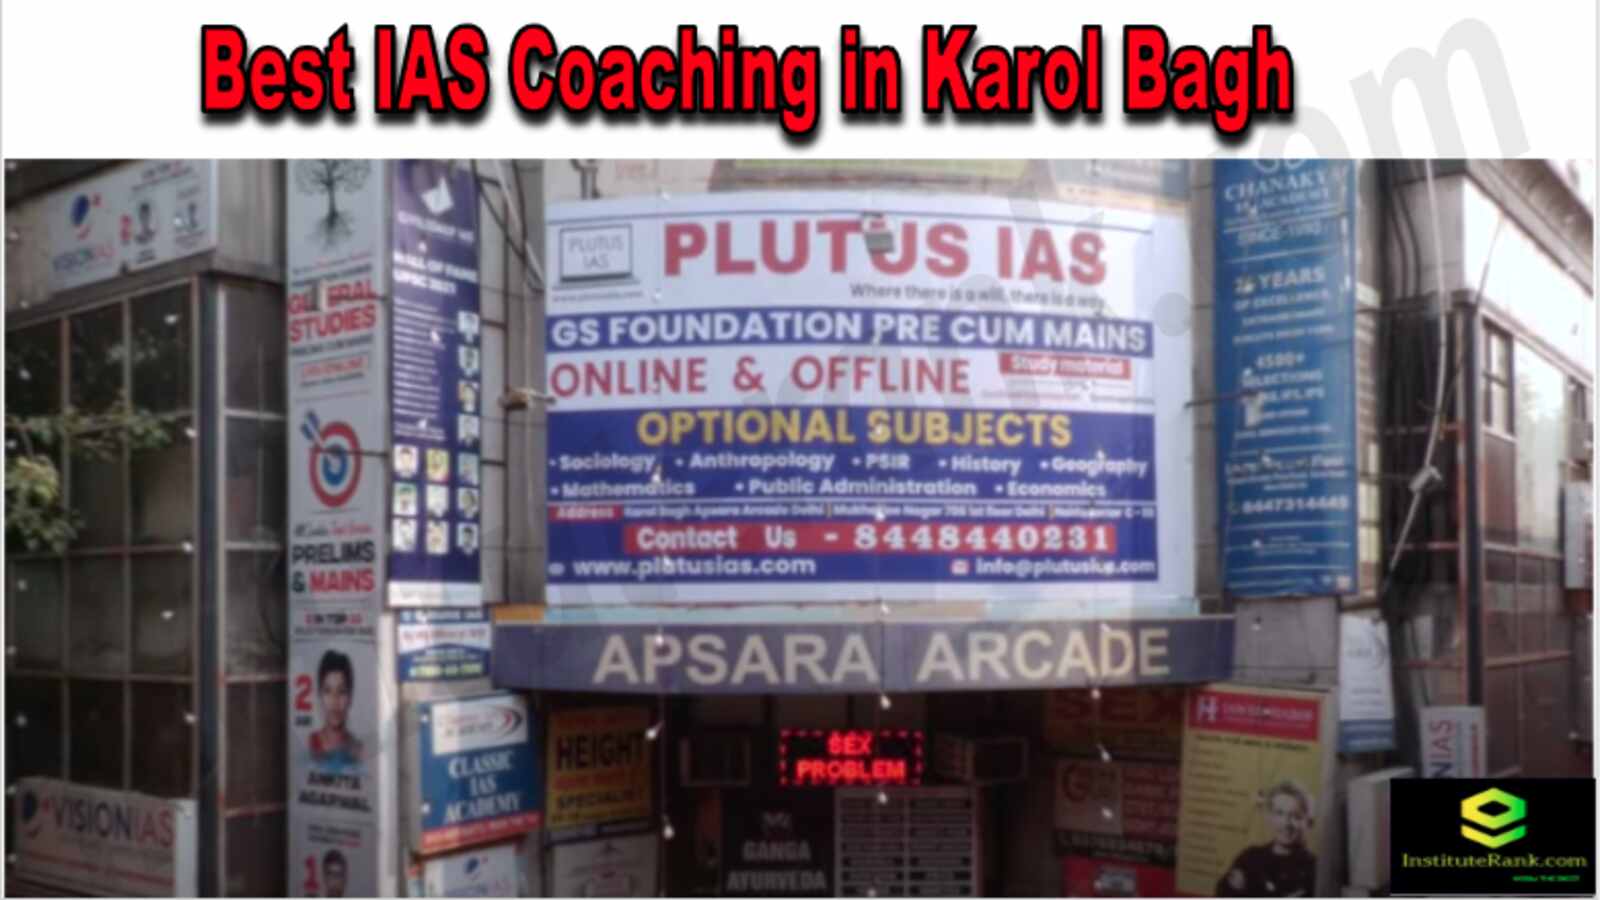 Plutus IAS Best Classroom Coaching in Karol Bagh